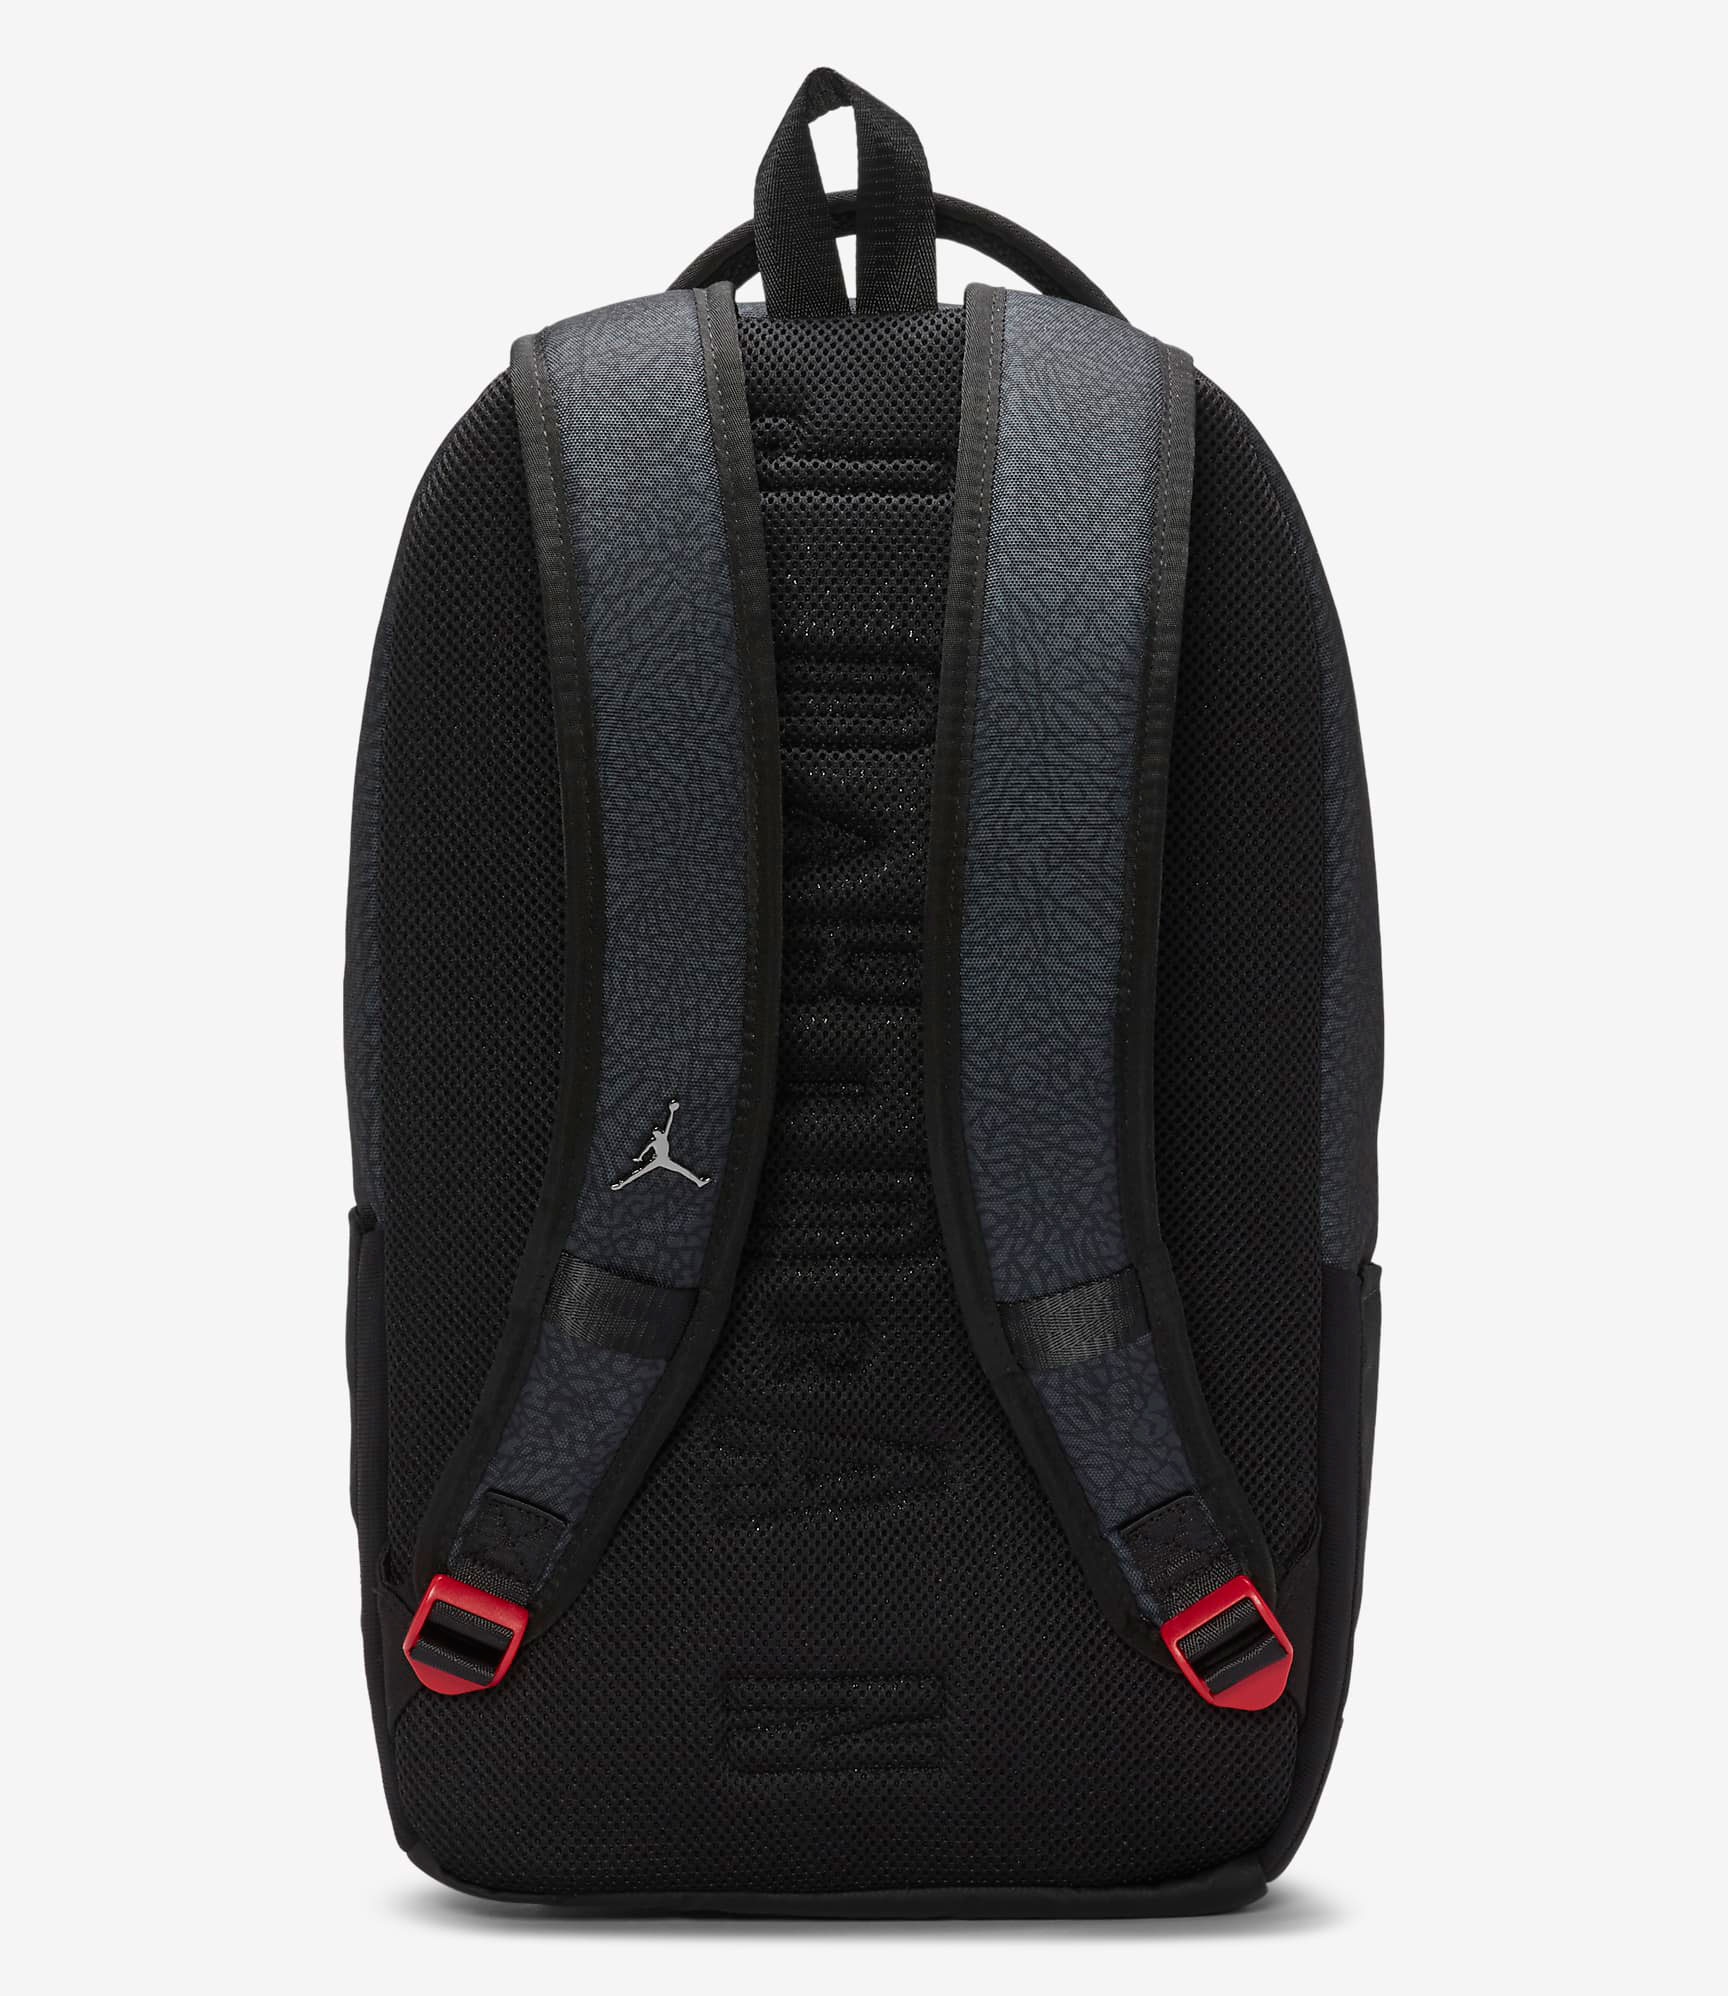 Backpacks to Match the Air Jordan 3 Denim | SneakerFits.com